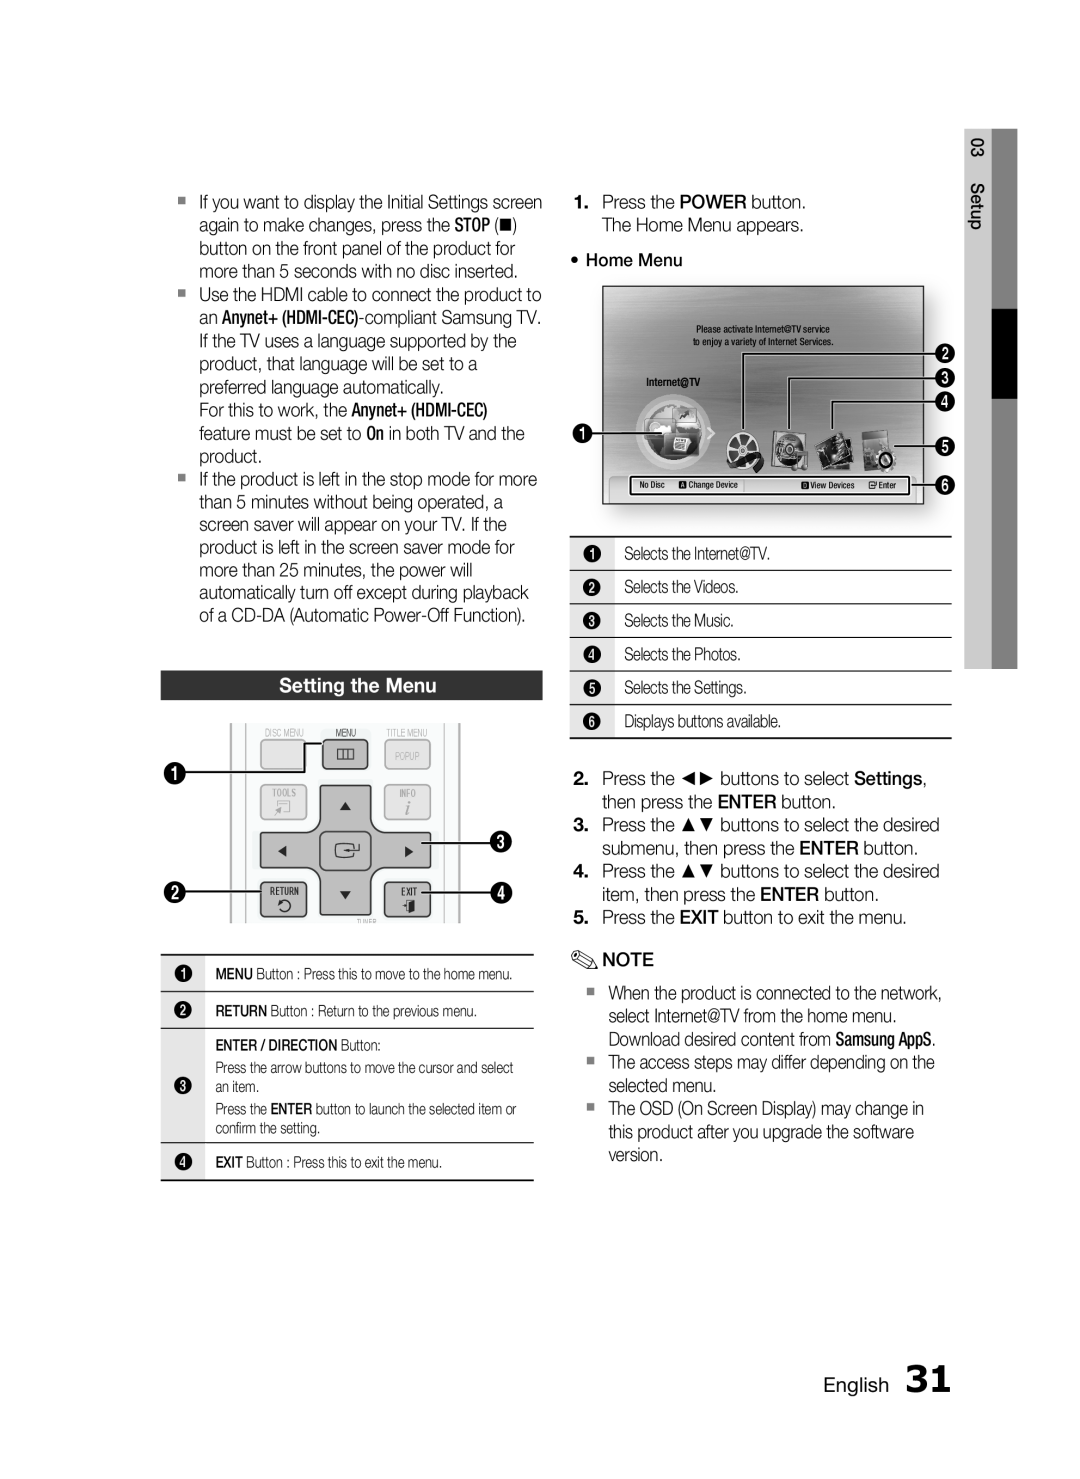 Samsung C6600 user manual Setting the Menu, English 